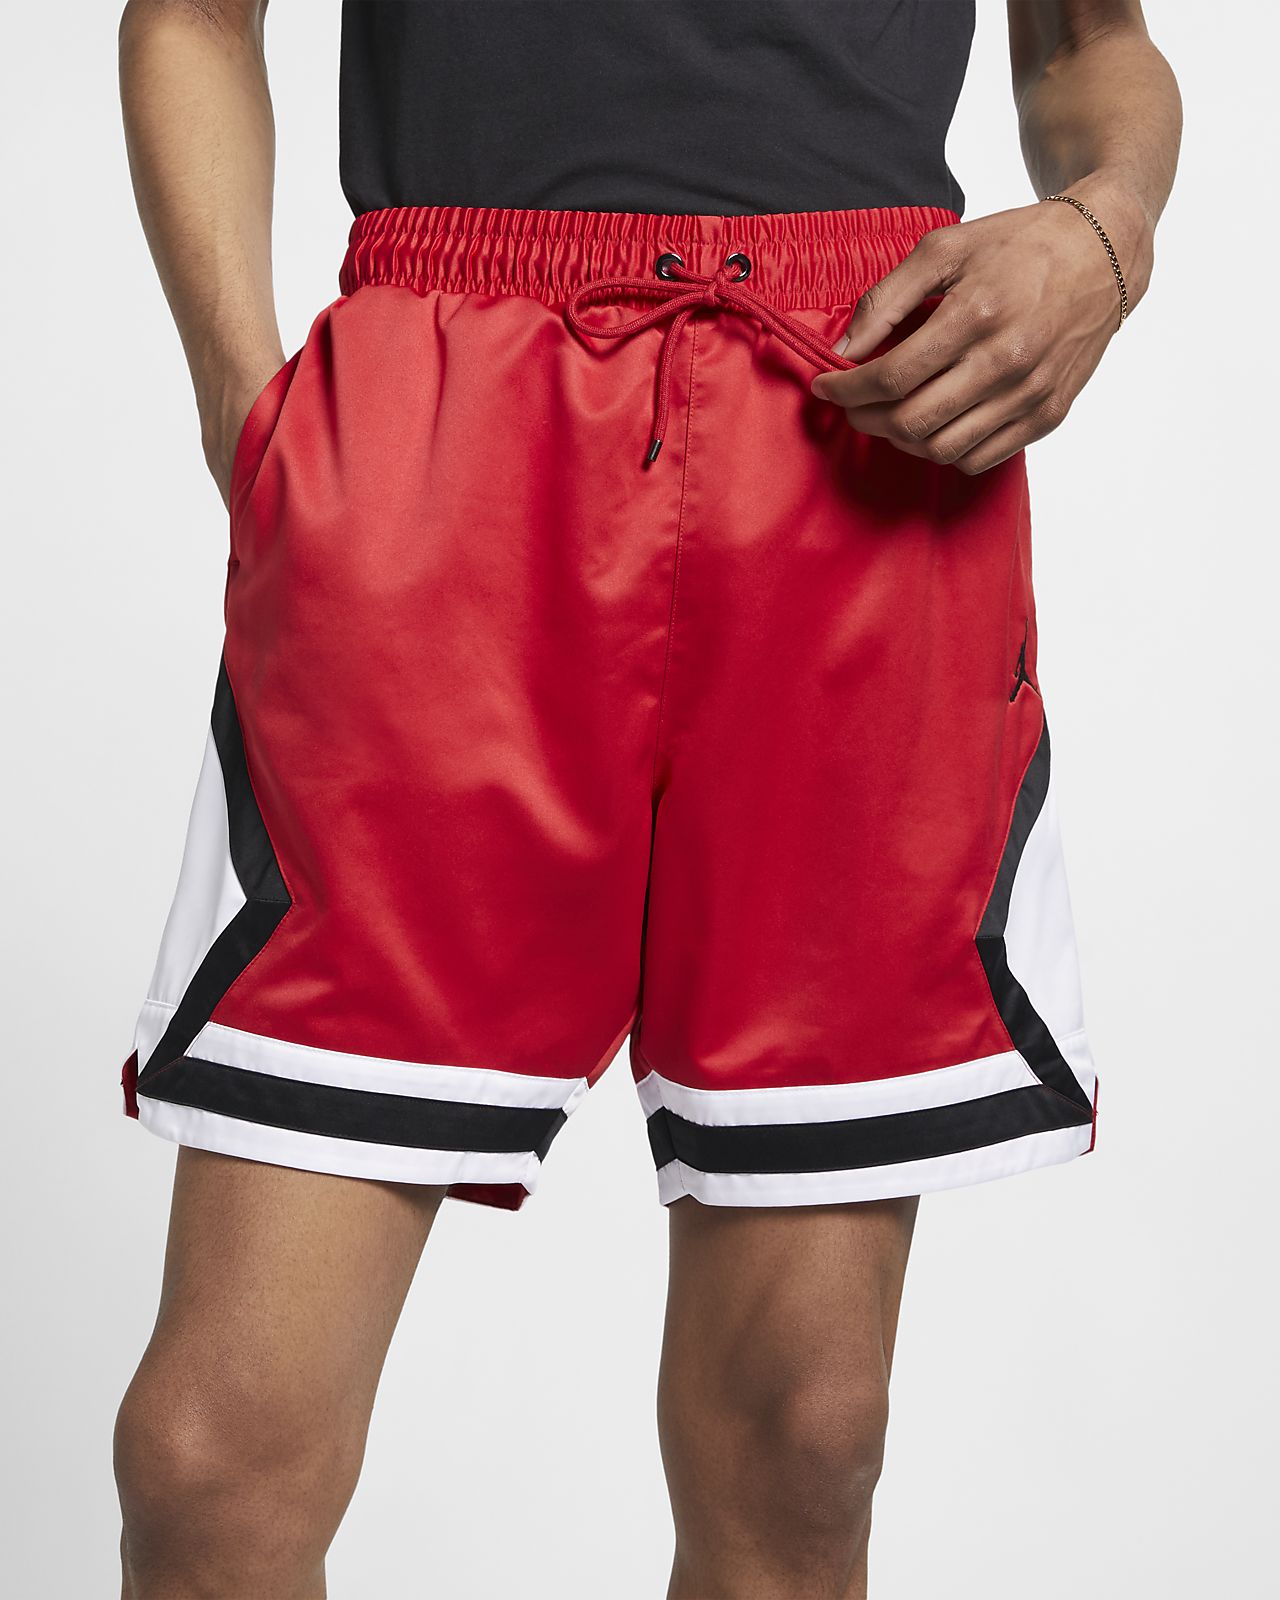 jordan shorts with zipper pockets